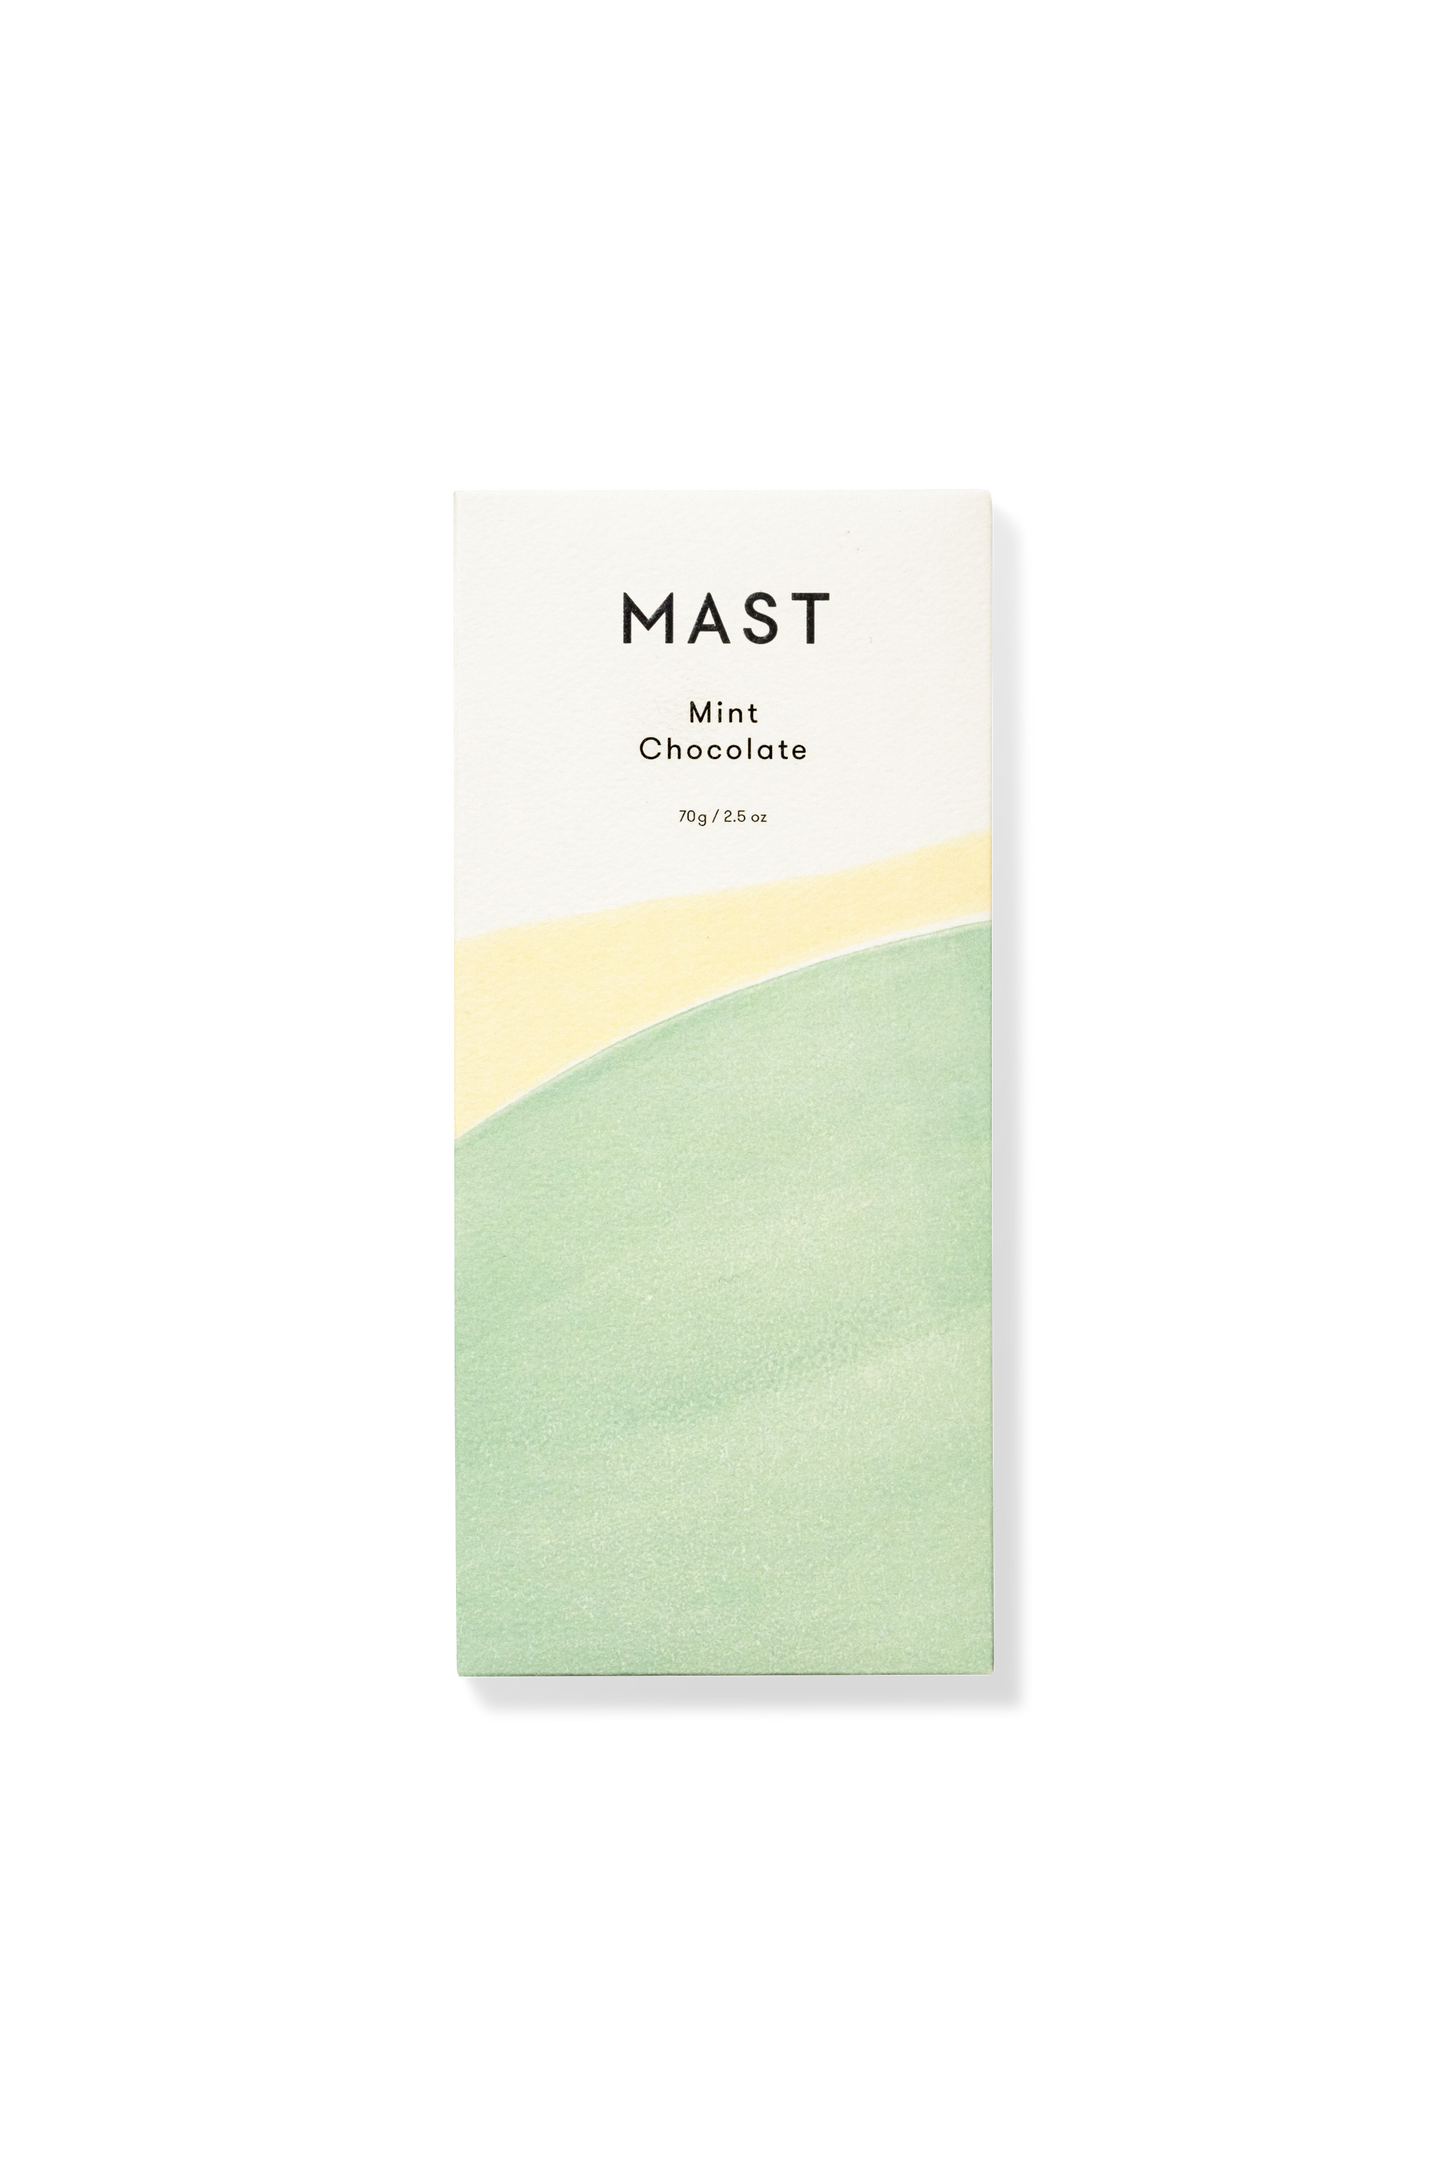 Mast Classic Cacao Bars, 70g/2.5oz